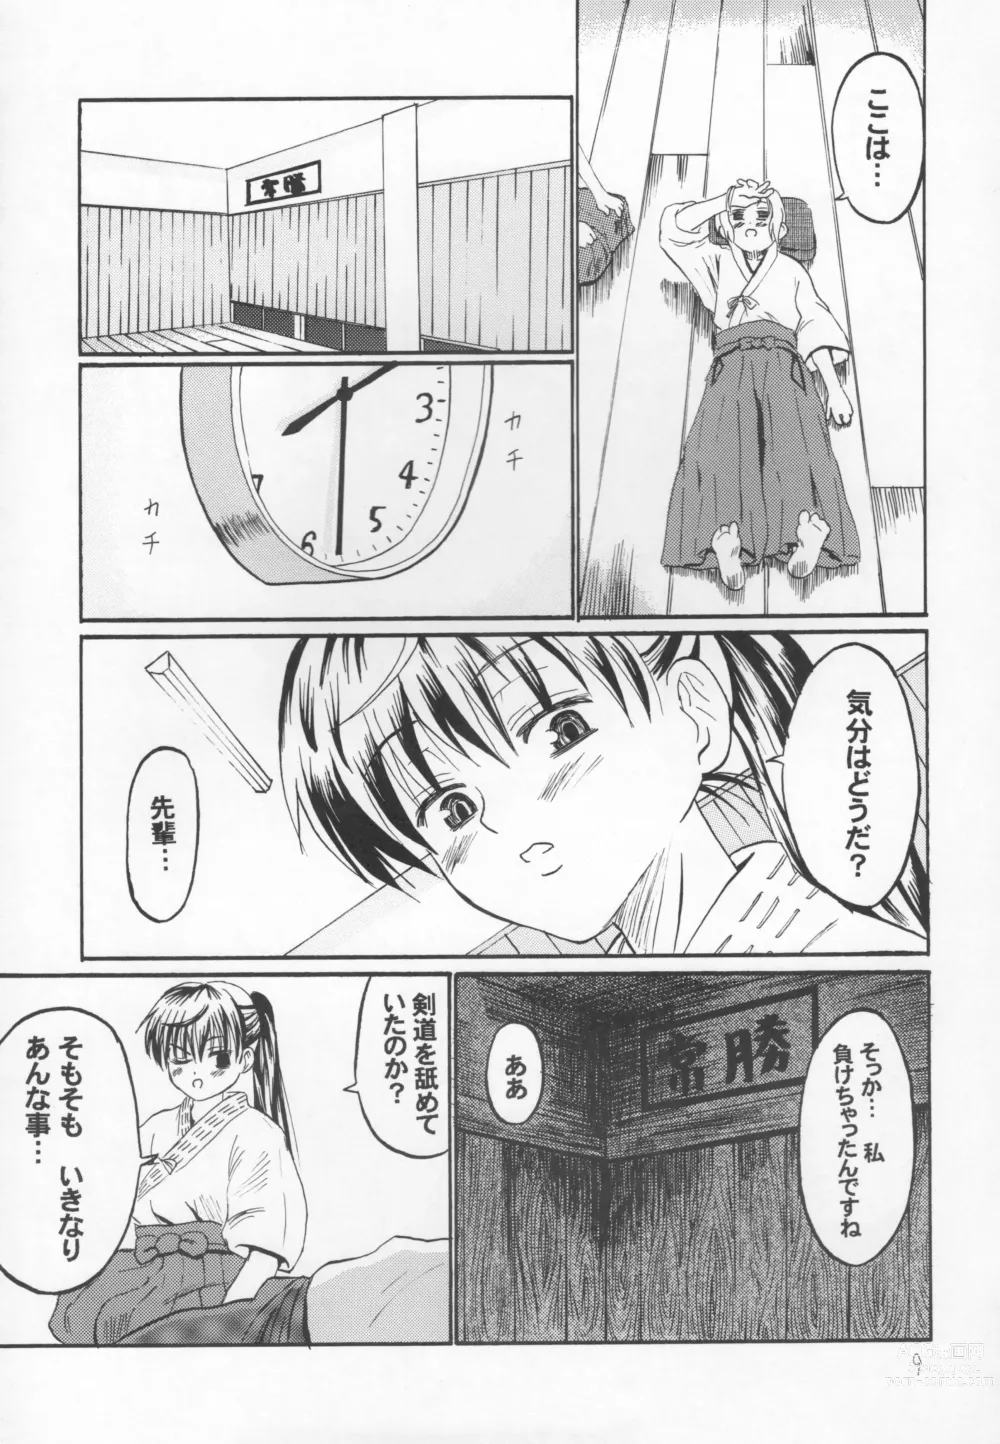 Page 7 of doujinshi Appare! Nukimi Shoujo